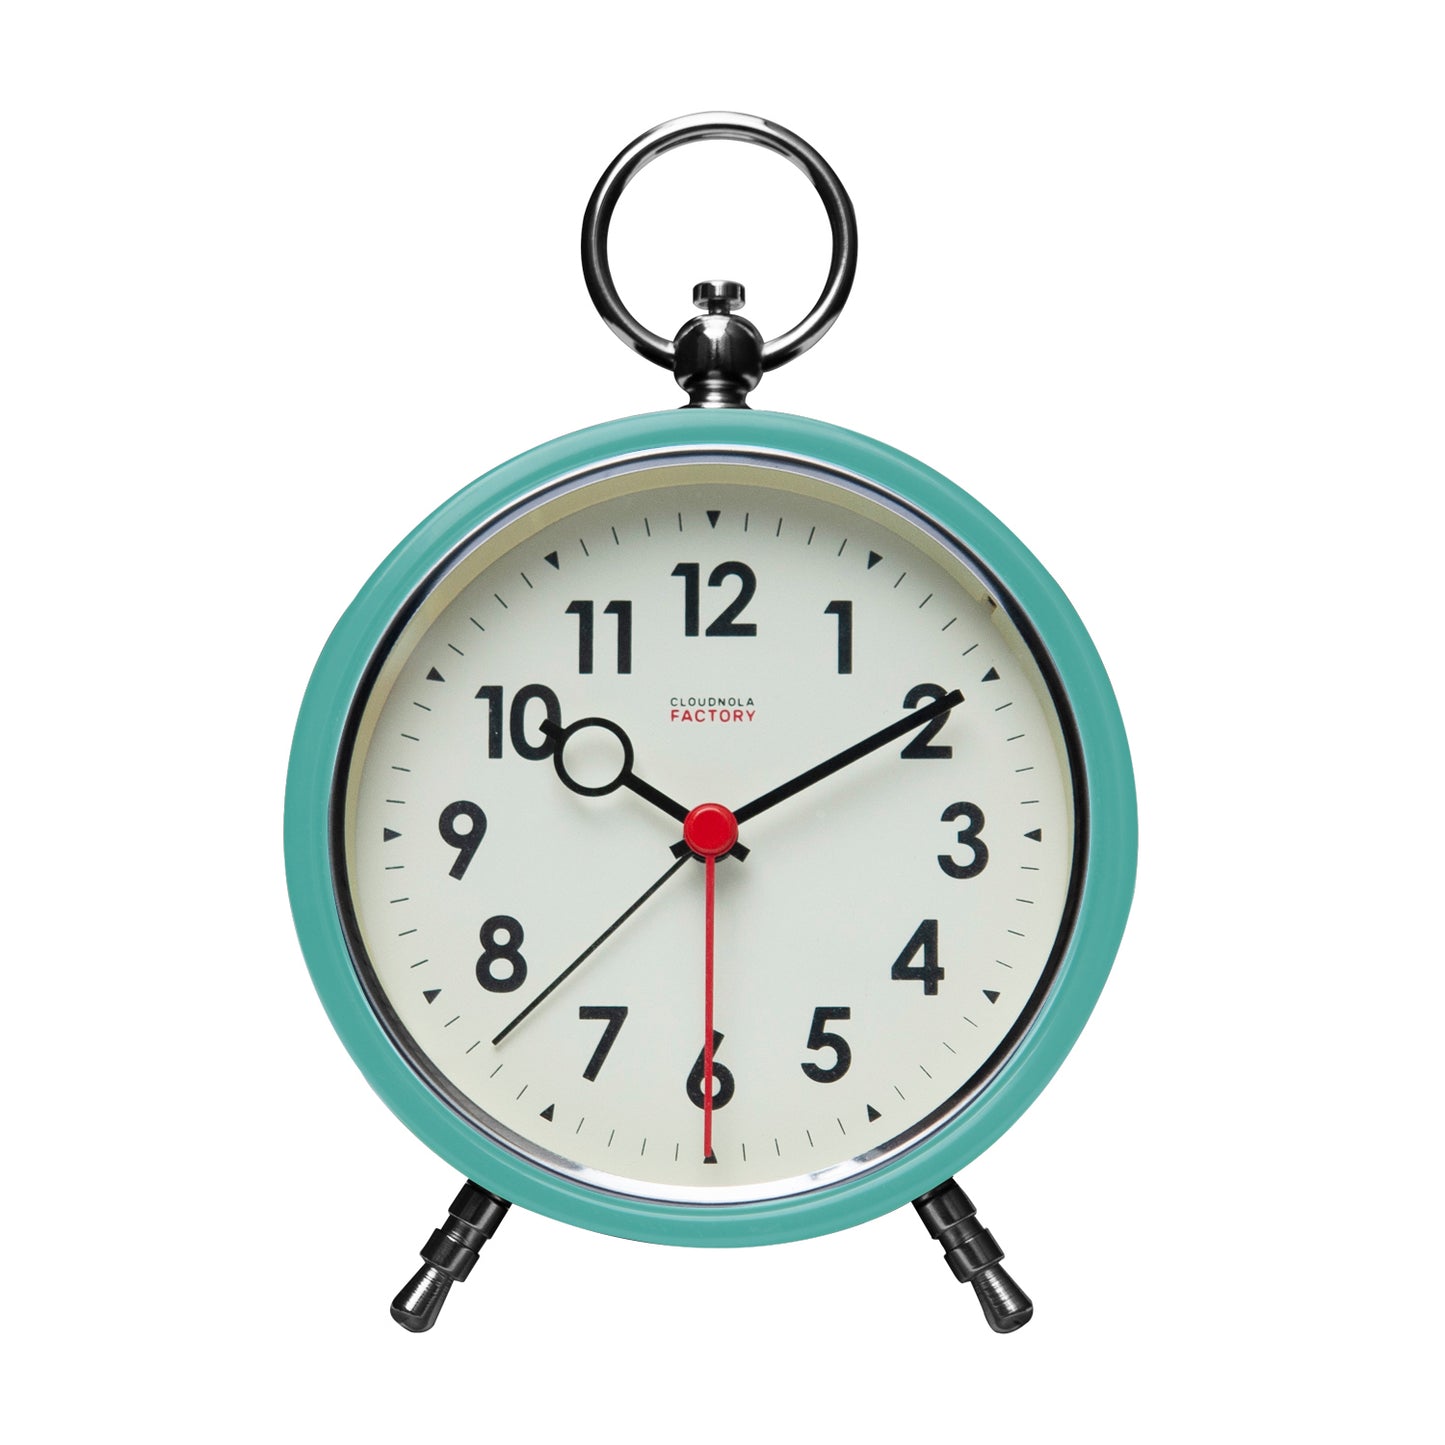 Factory Alarm Turquoise - Alarm Clock - Silent Mechanism - Snooze - LED